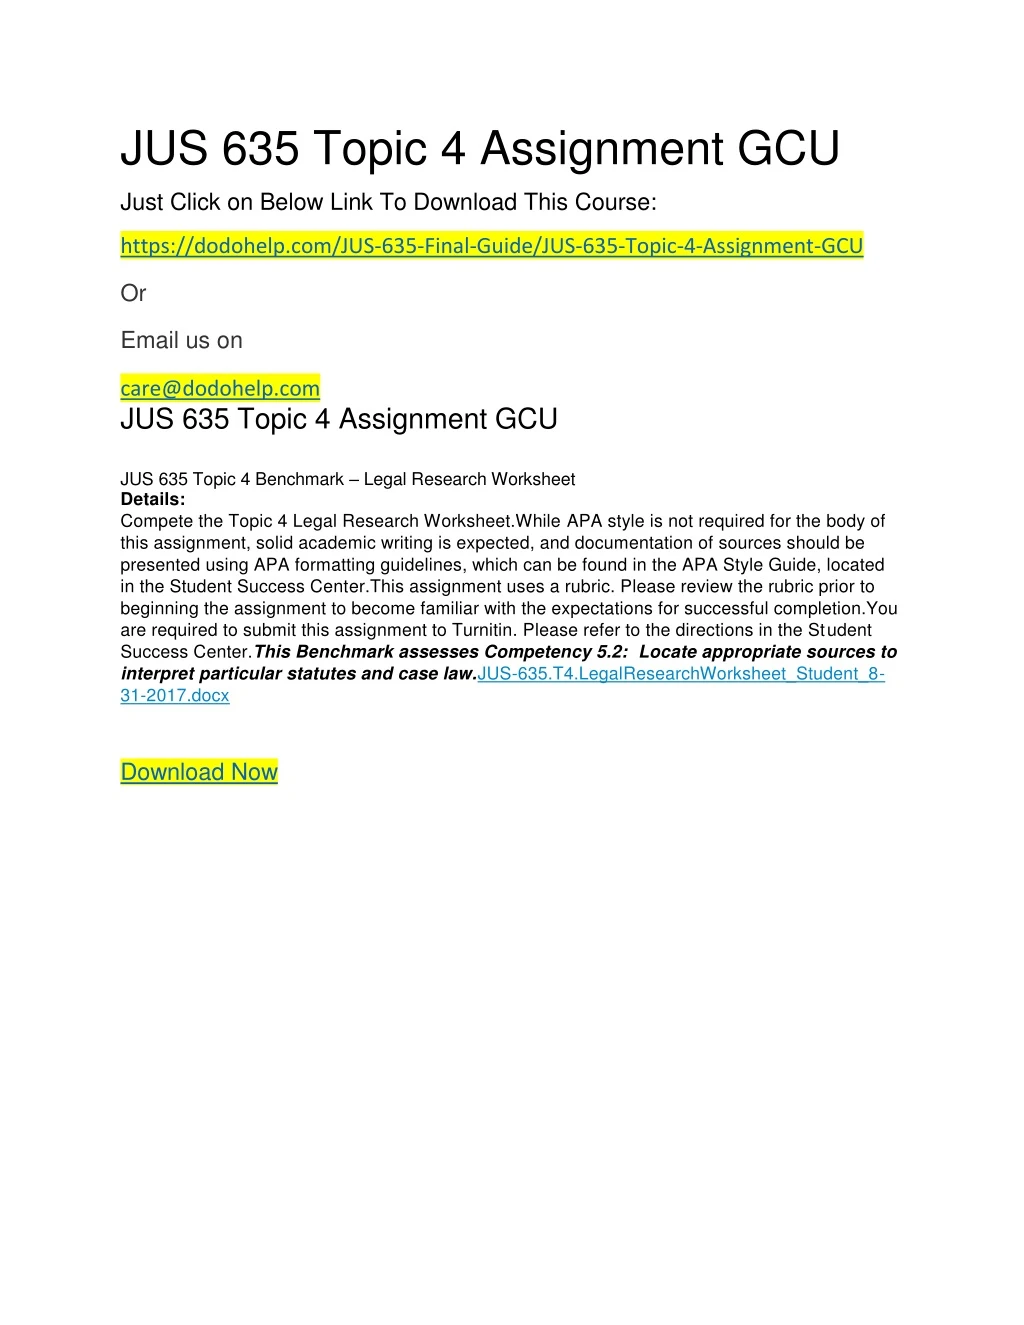 jus 635 topic 4 assignment gcu